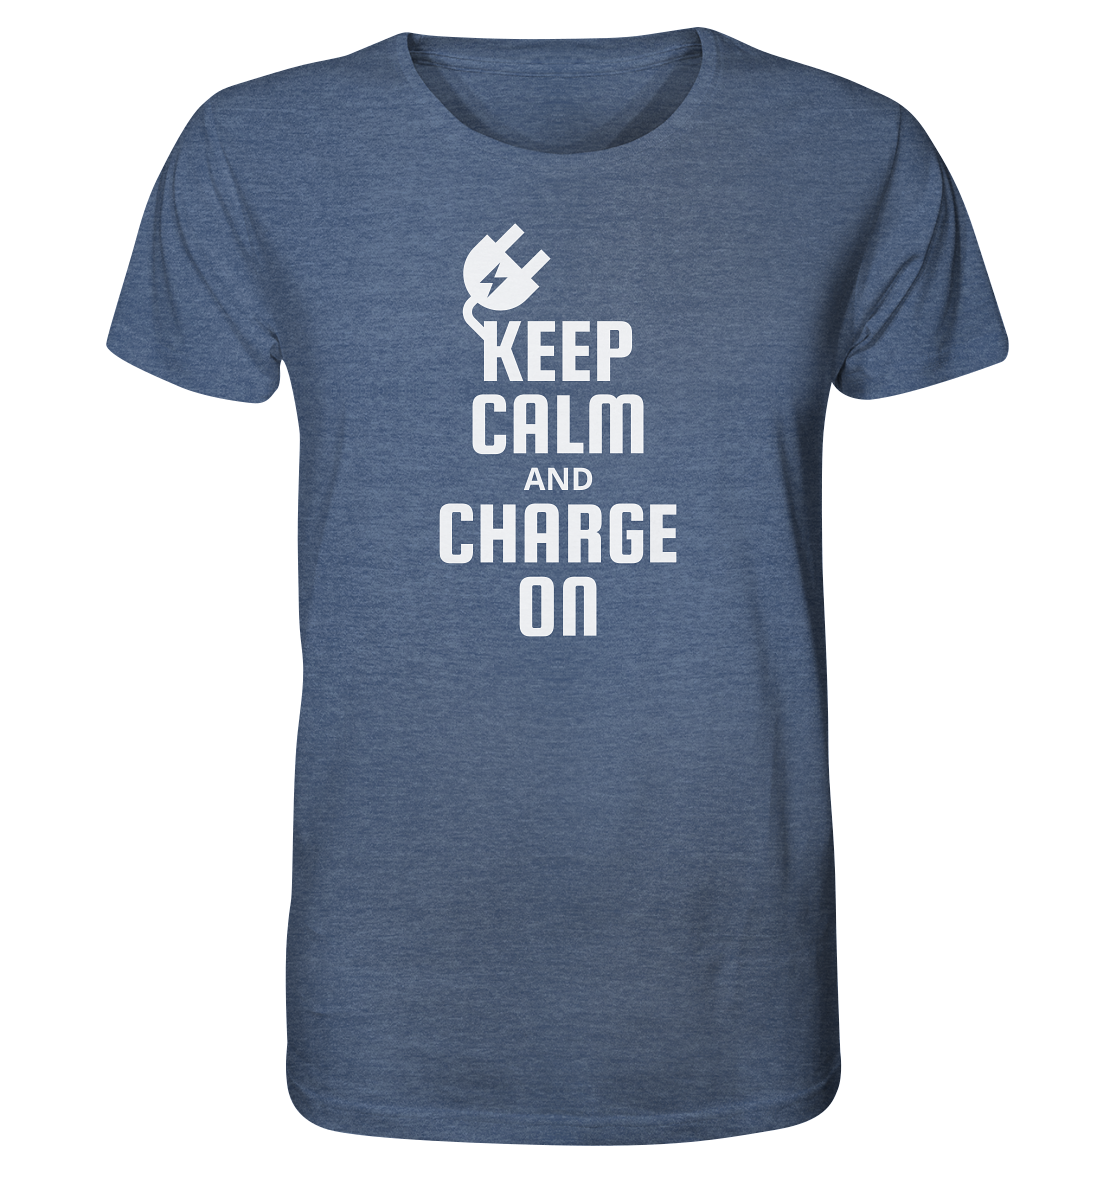 Charge on ORGANIC - Organic Shirt (meliert)